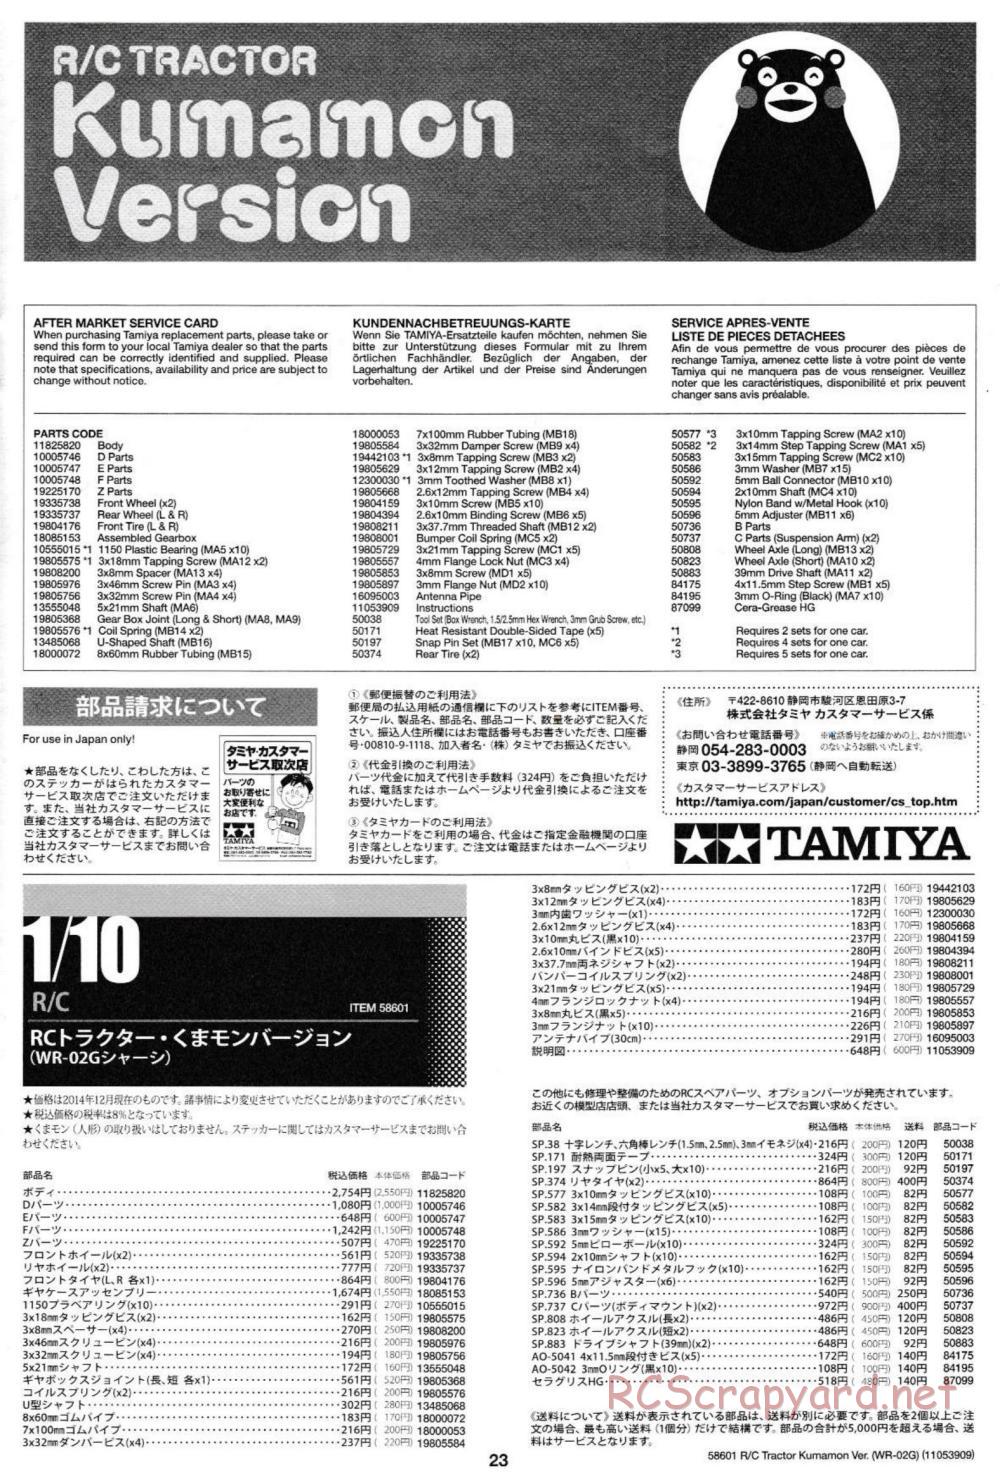 Tamiya - Tractor Kumamon Version Chassis - Manual - Page 23